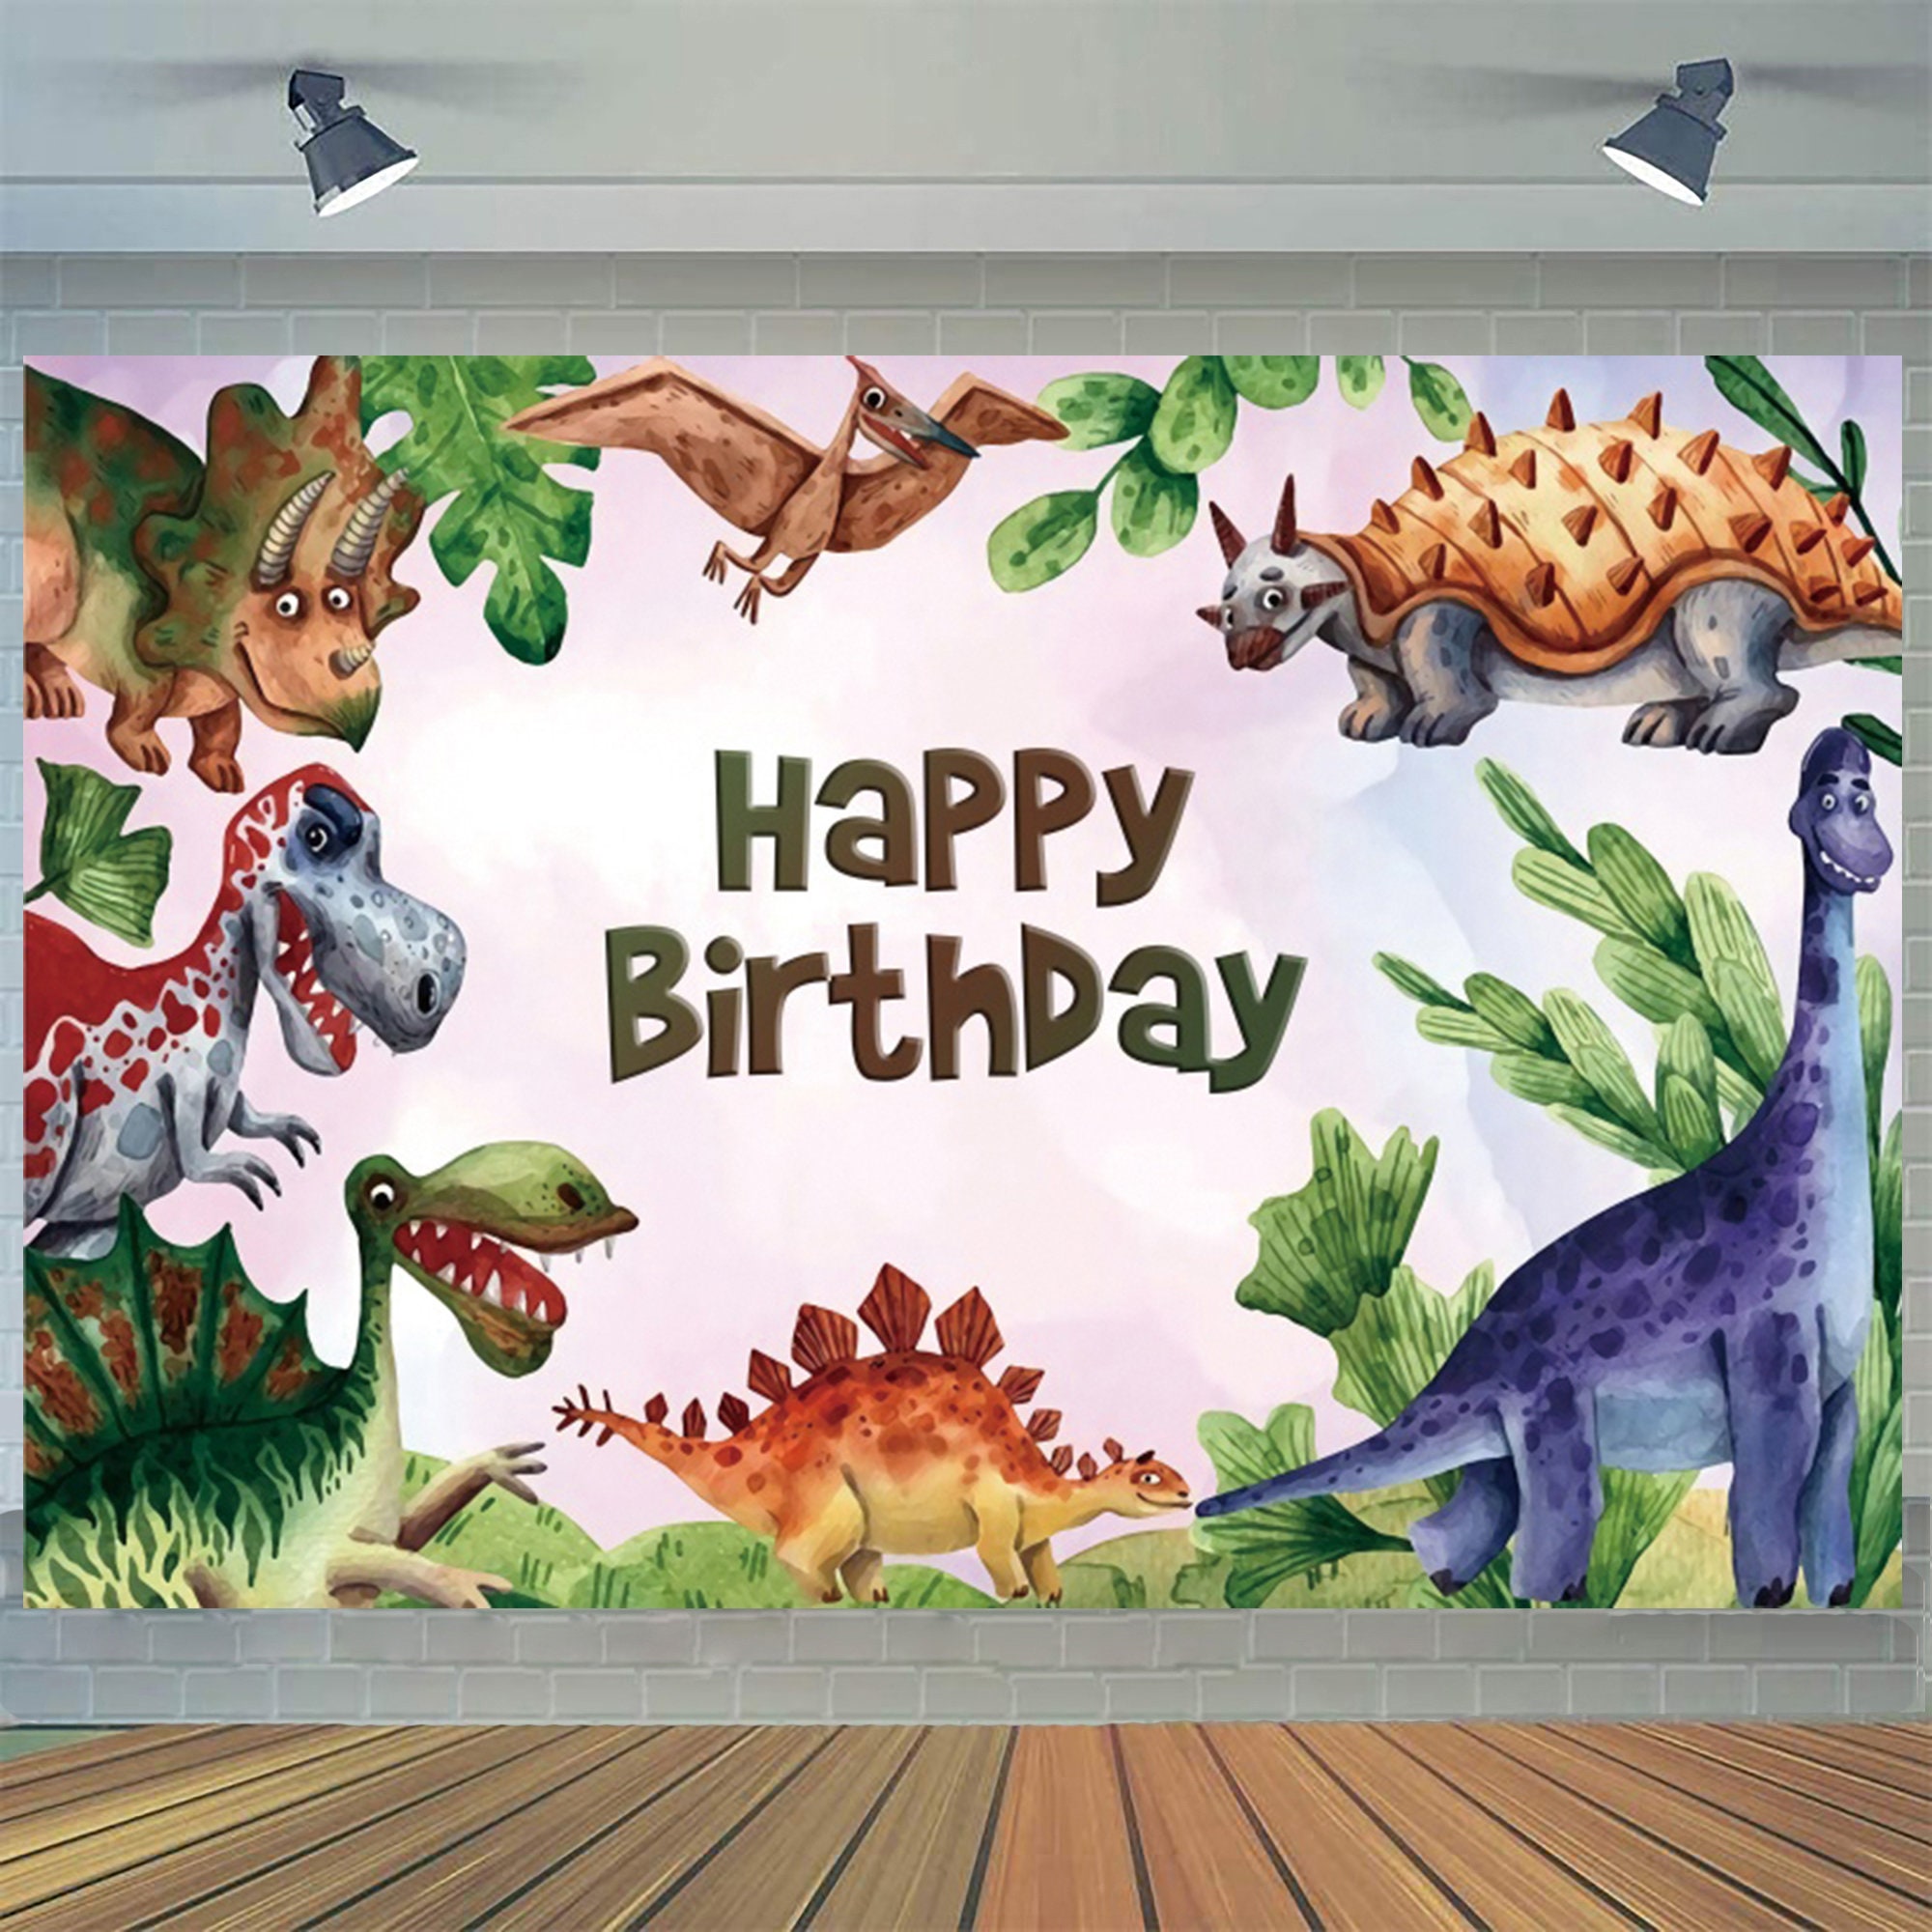 Happy Birthday Dinosaur Images - Printable Template Calendar